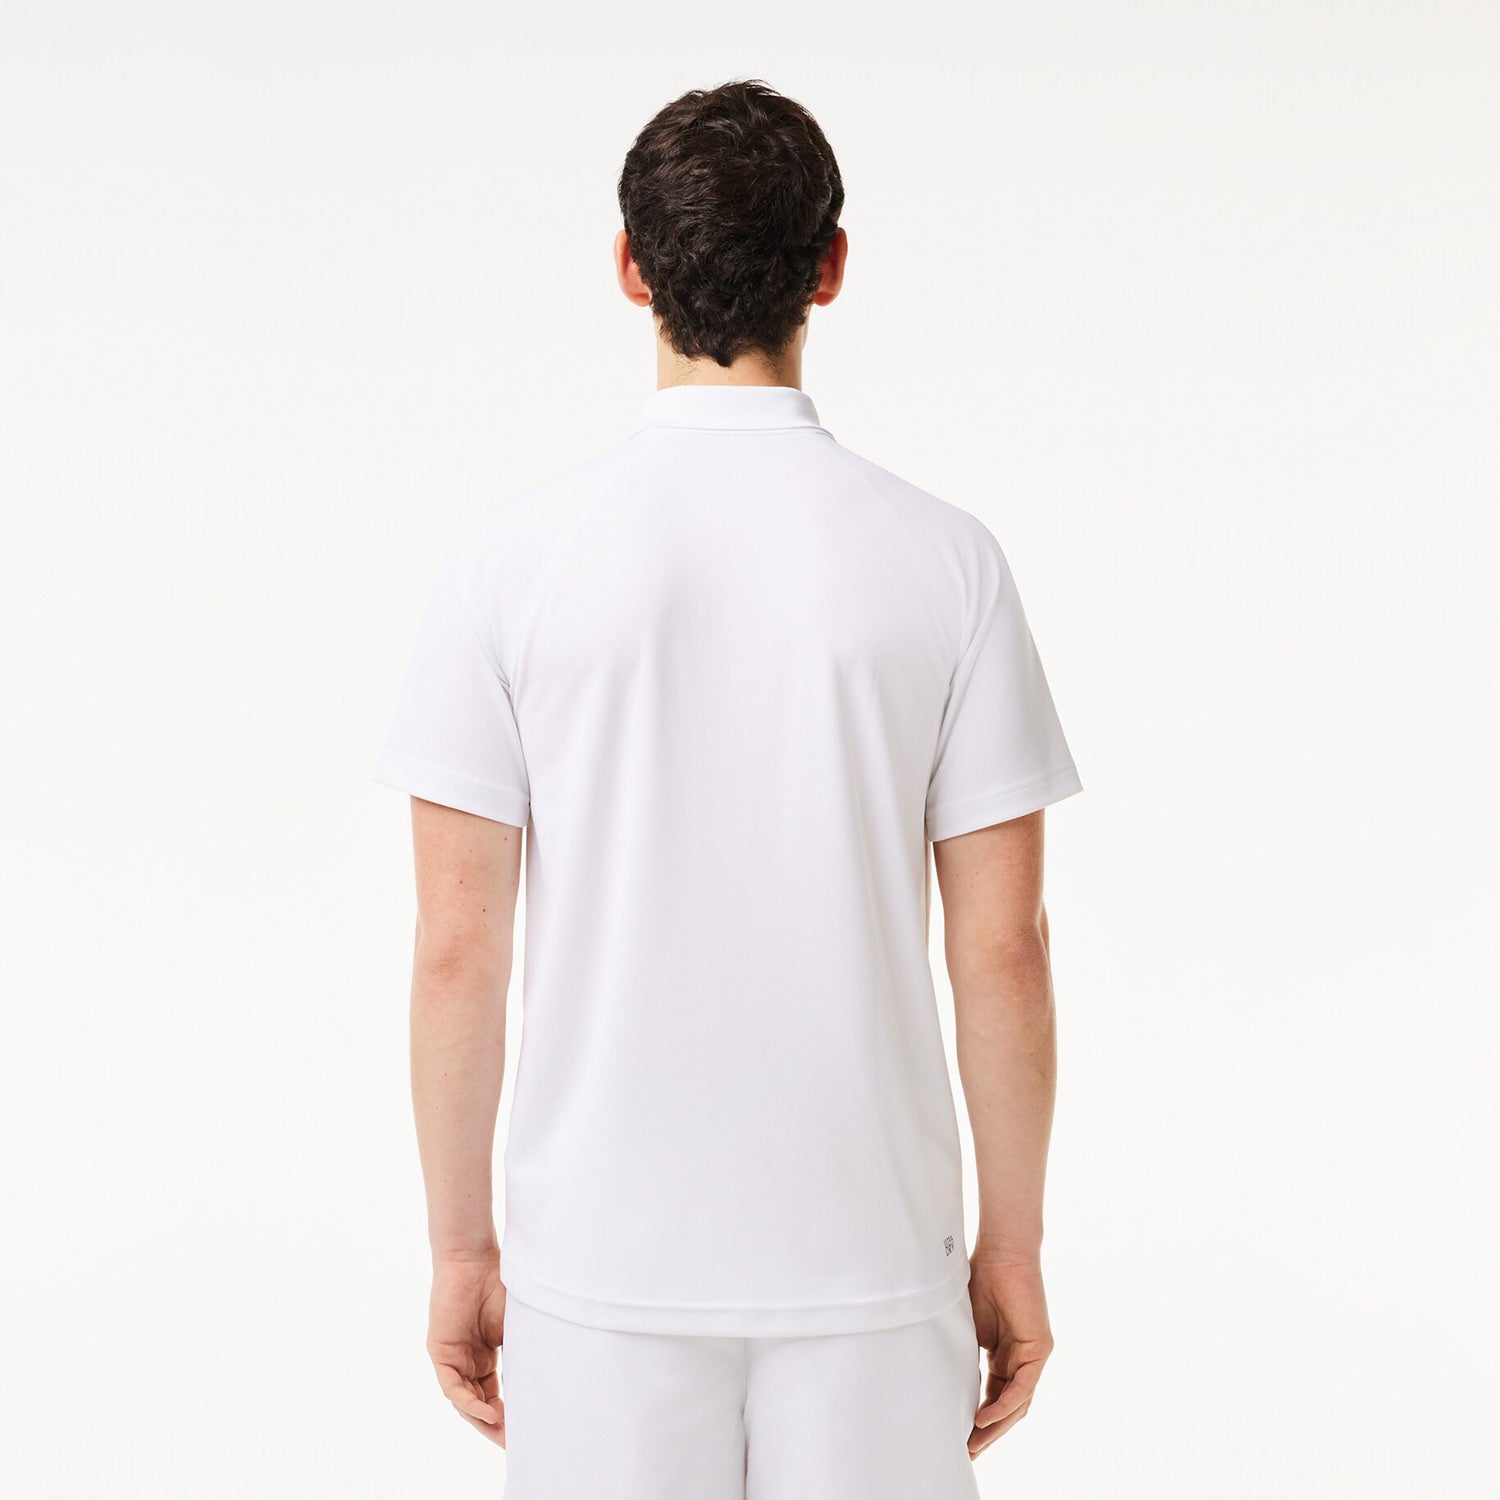 Lacoste Men's Ultra Dry Pique Tennis Polo - White (2)